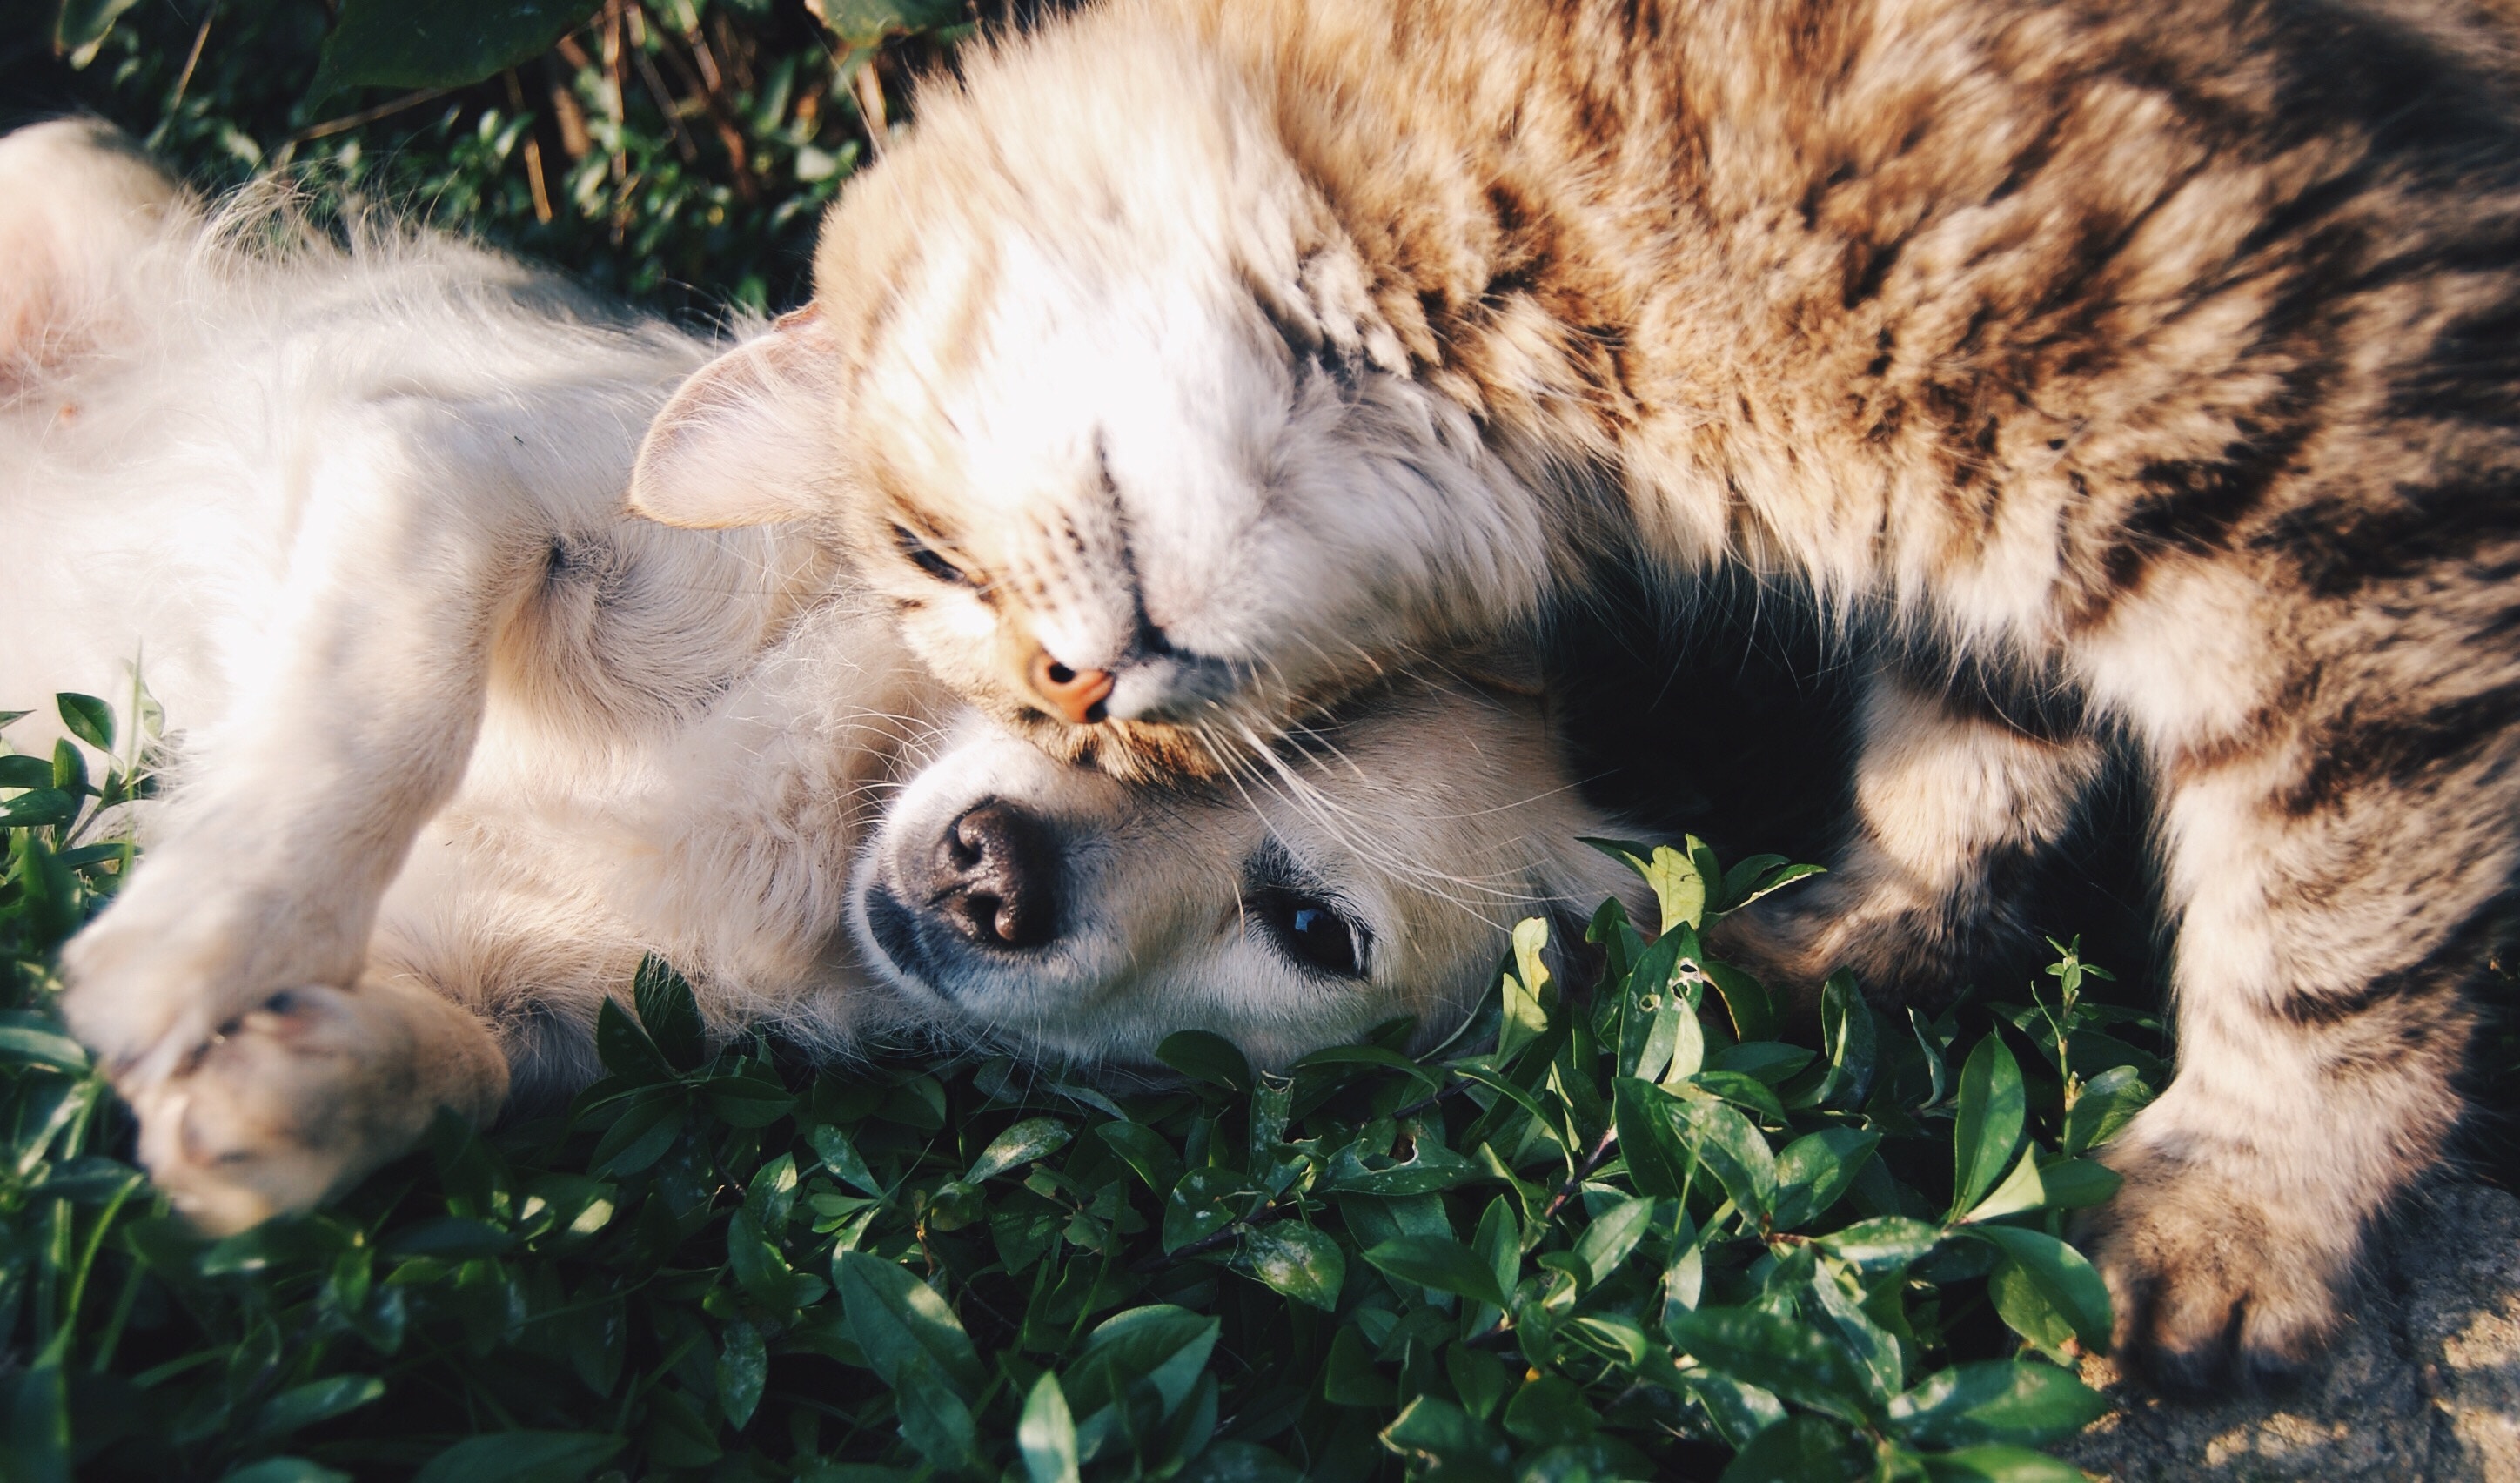 A dog and a cat cuddling. Photo by Krista Mangulsone on Unsplash